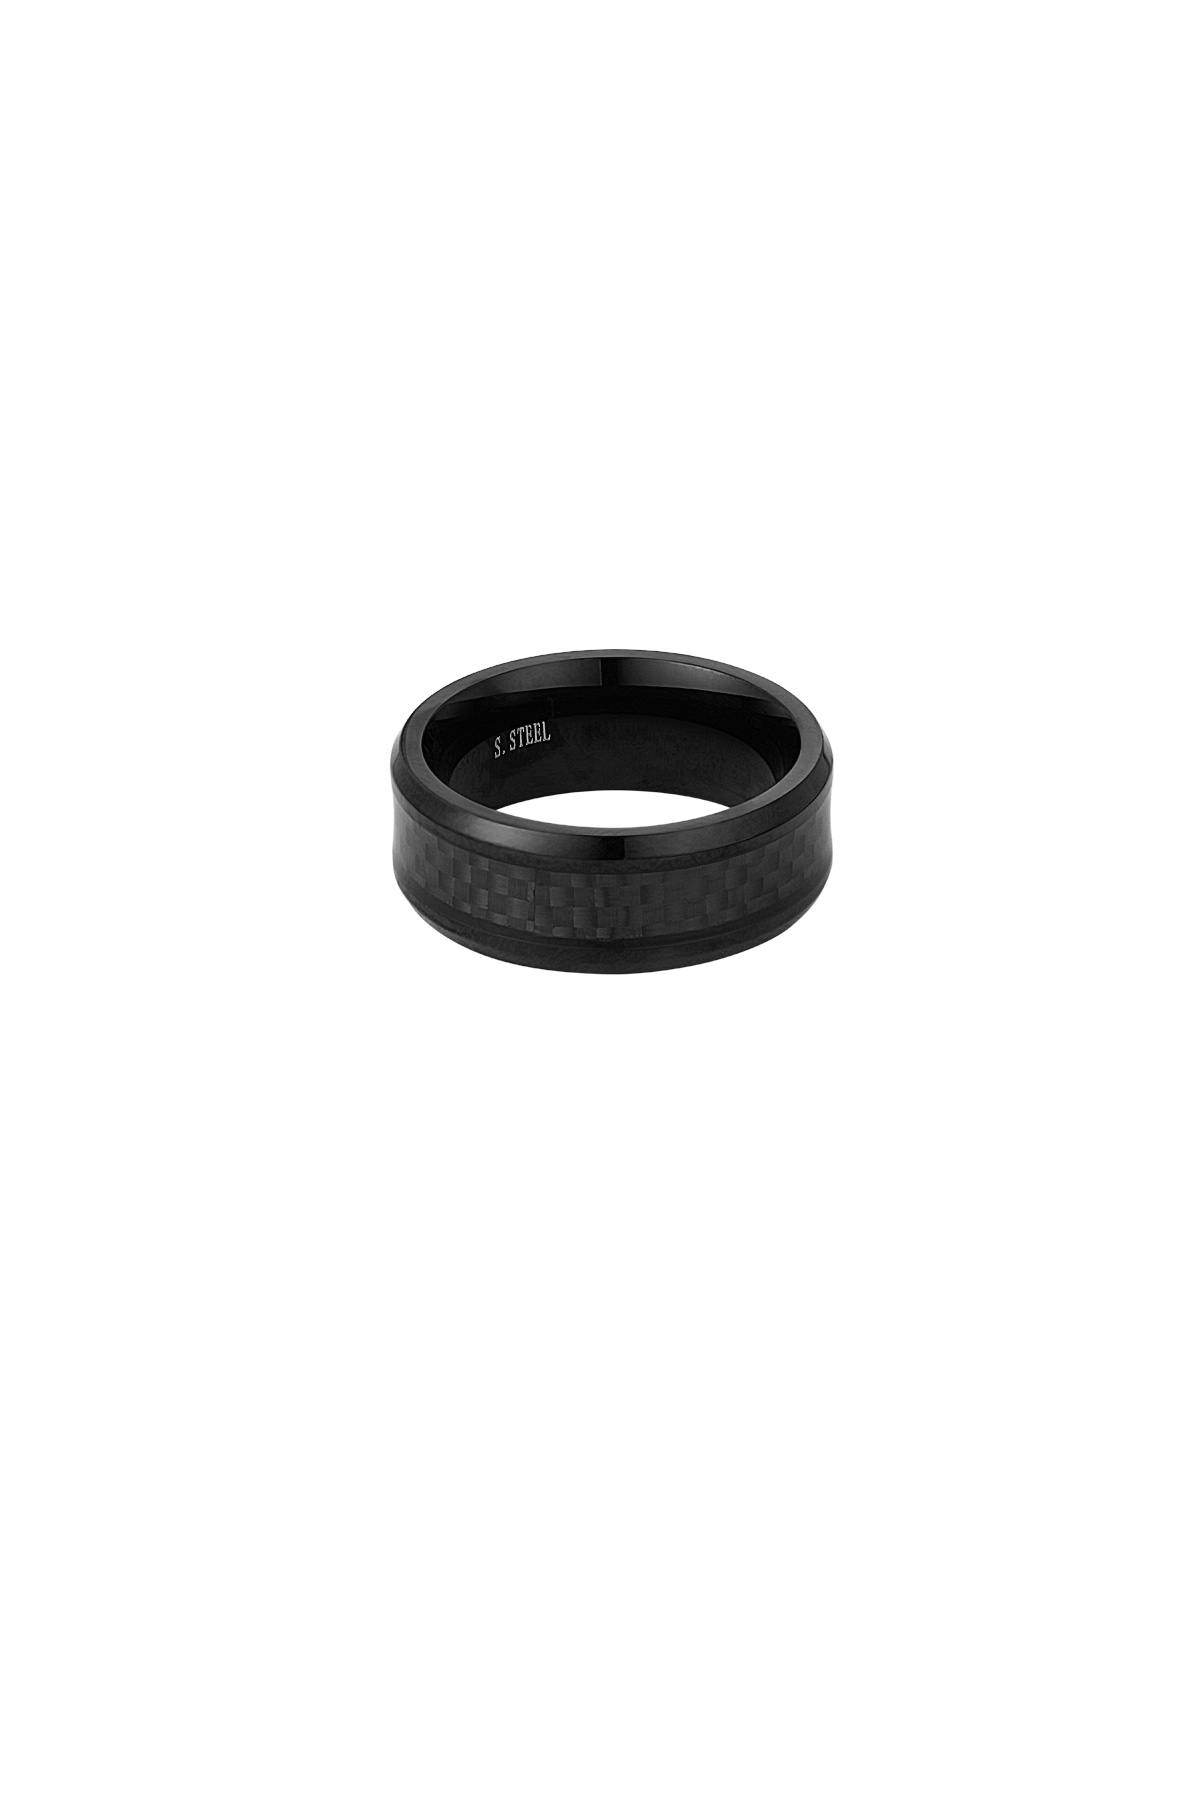 Erkek yüzüğü zikzak - siyah 